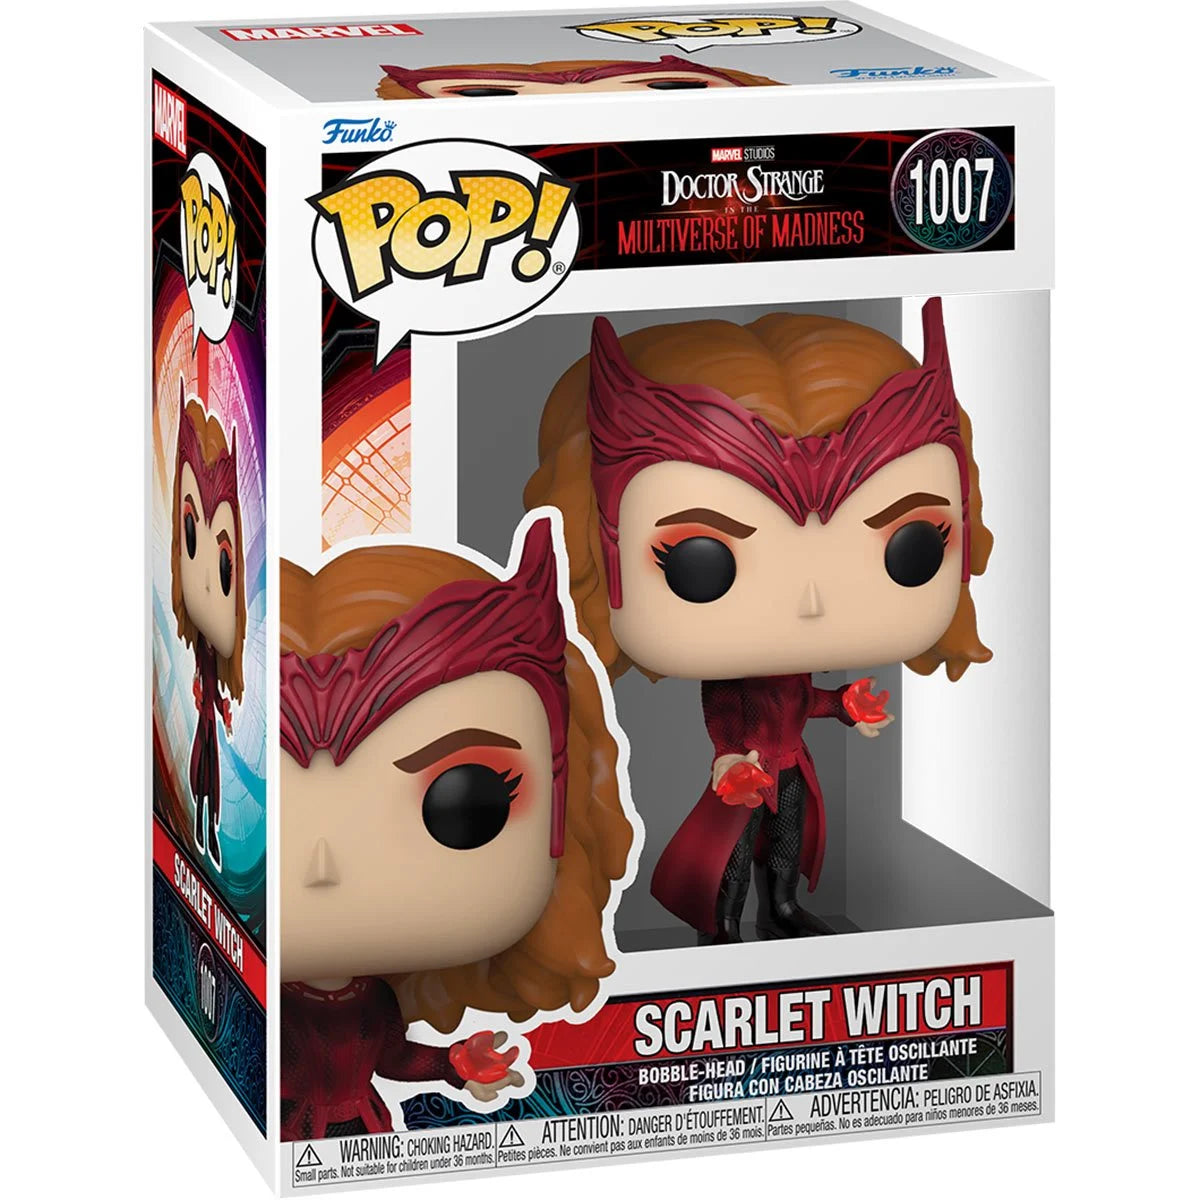 Scarlet Witch - Doctor Strange Multiverse of Madness Funko Pop!